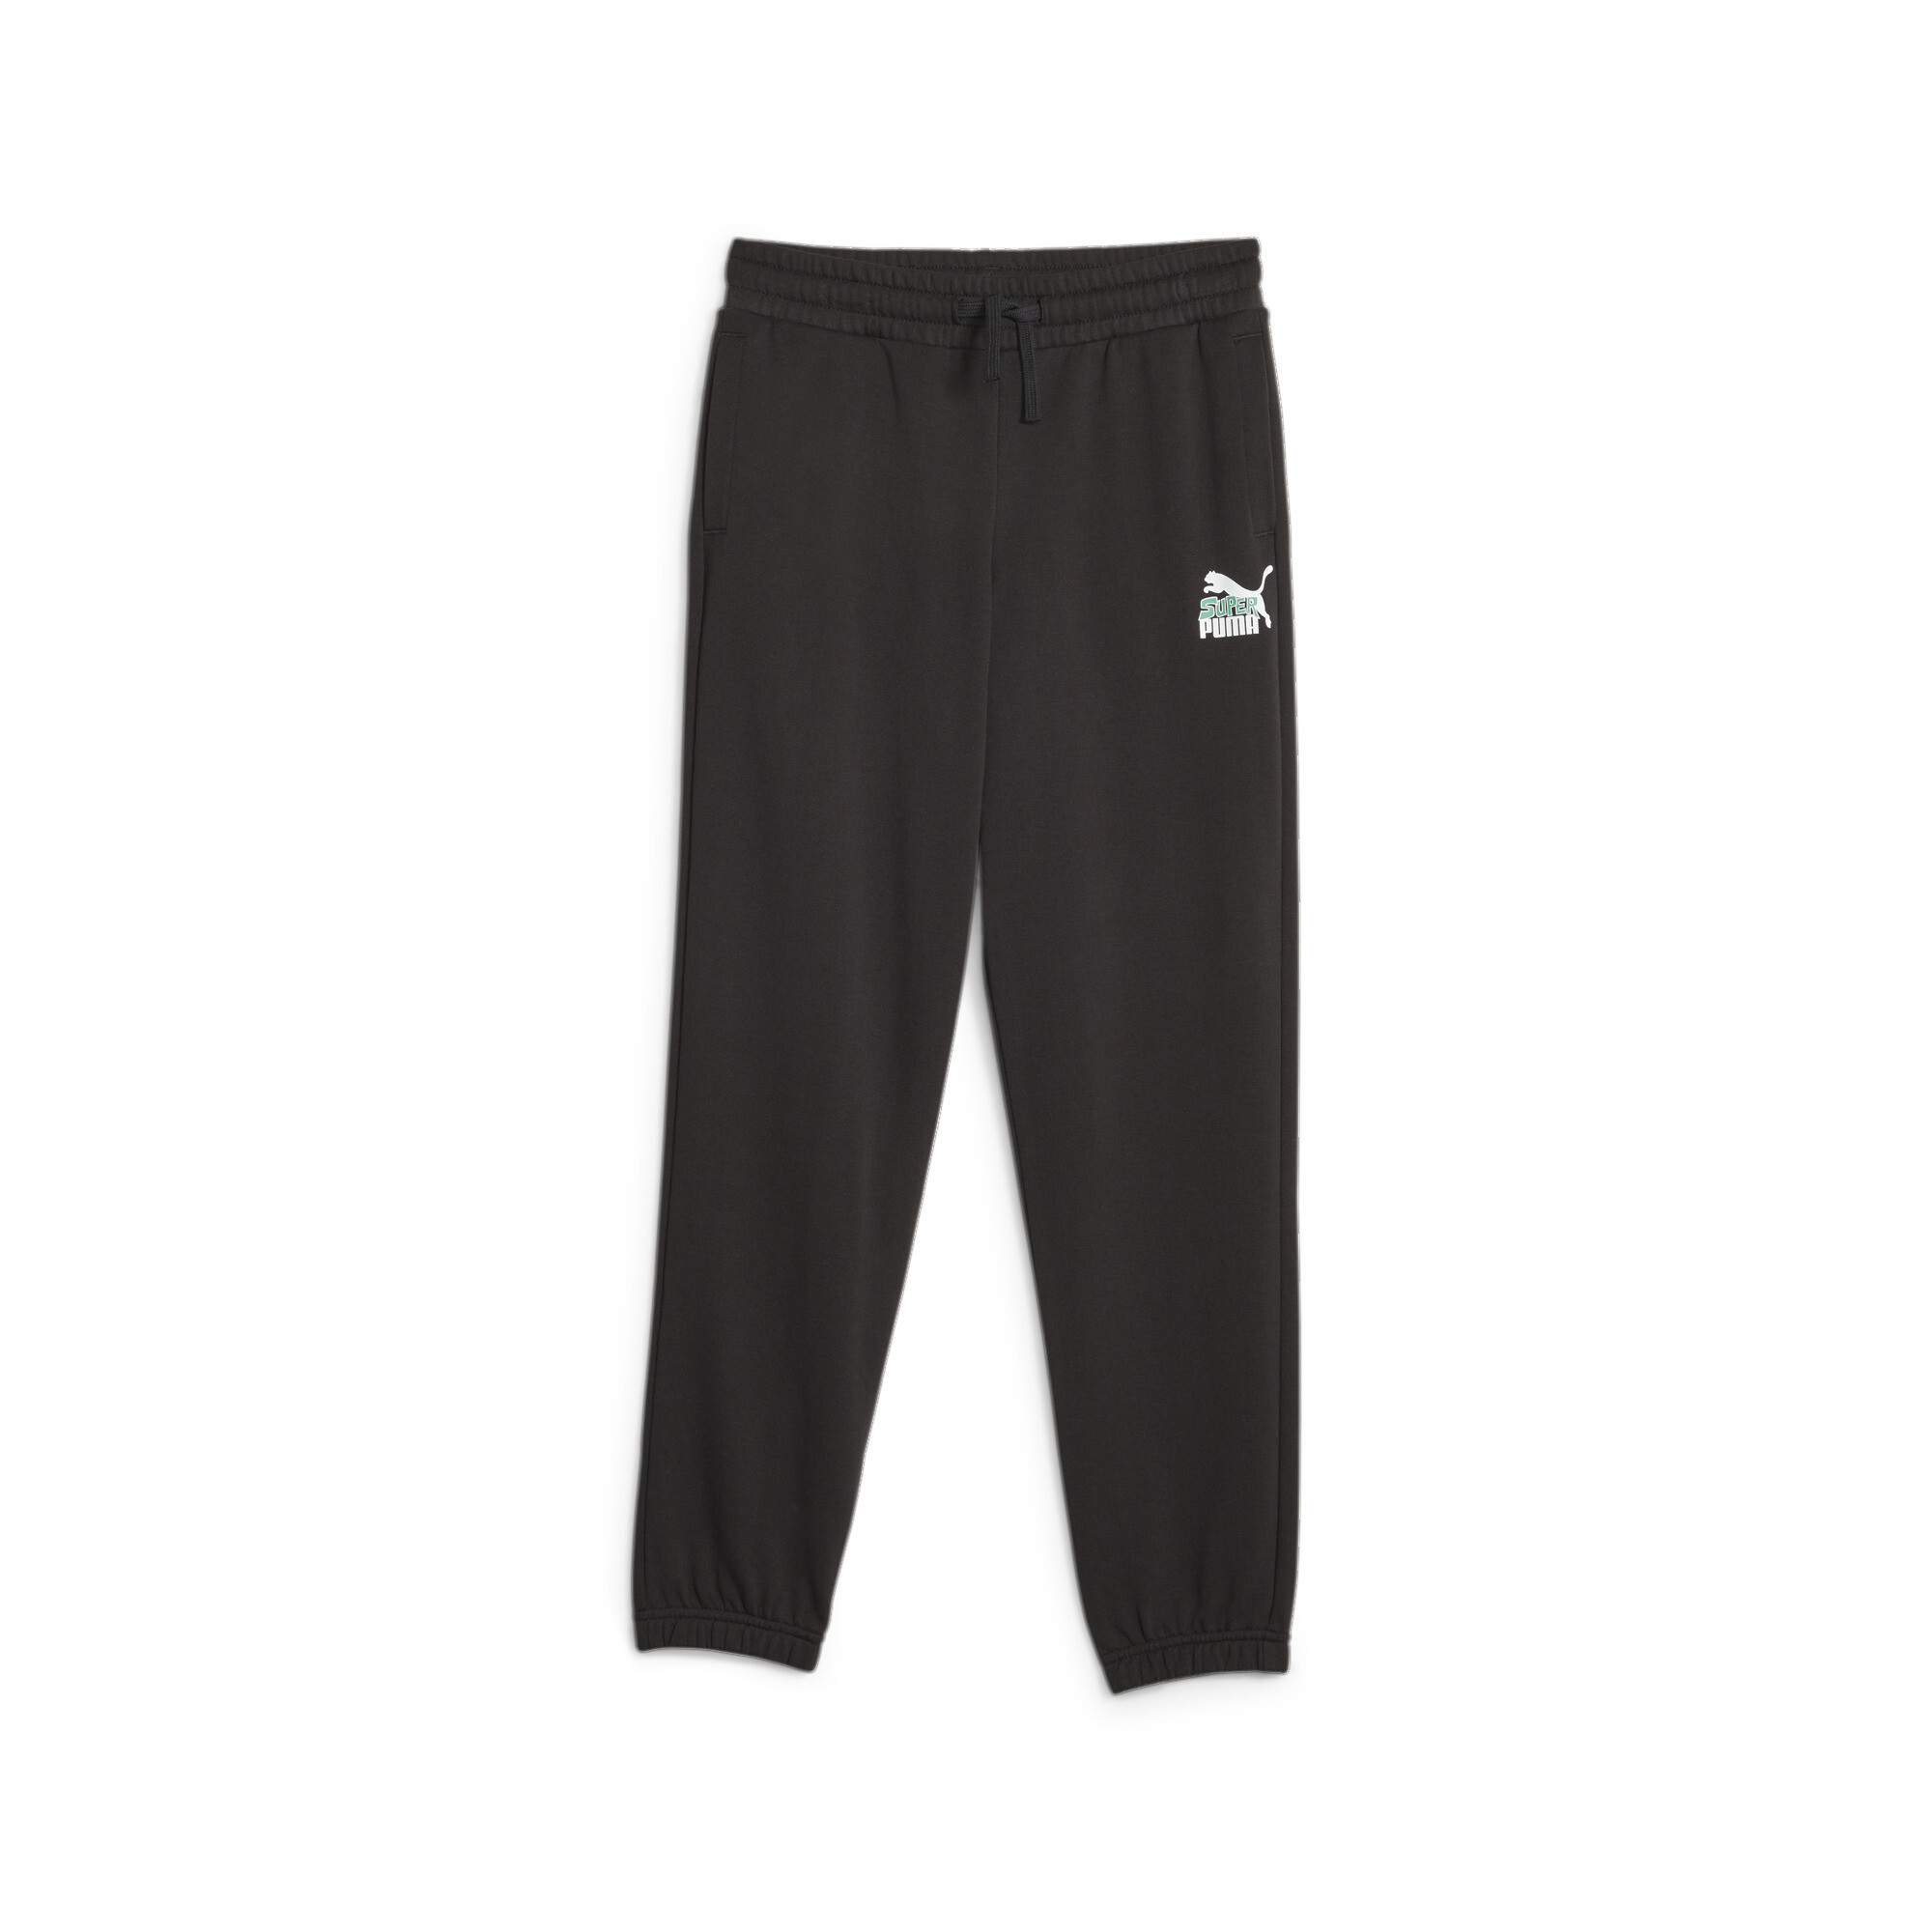 Classics SUPER PUMA Sweatpants In Black, Size 7-8 Youth